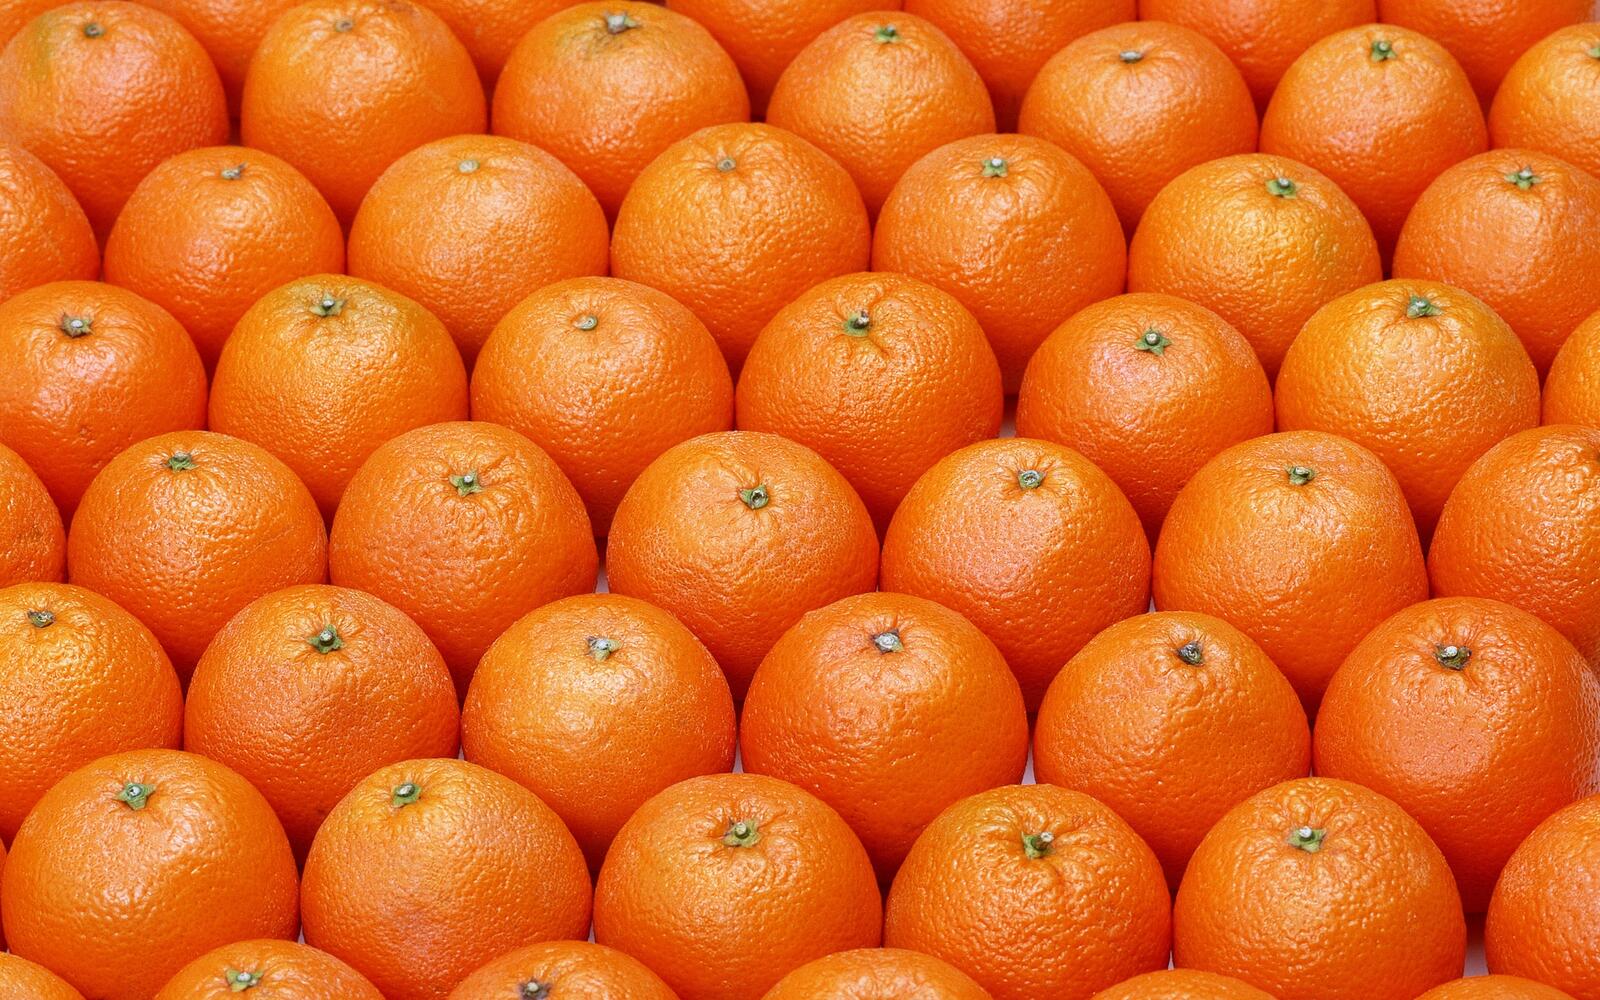 Wallpapers oranges citrus pattern on the desktop